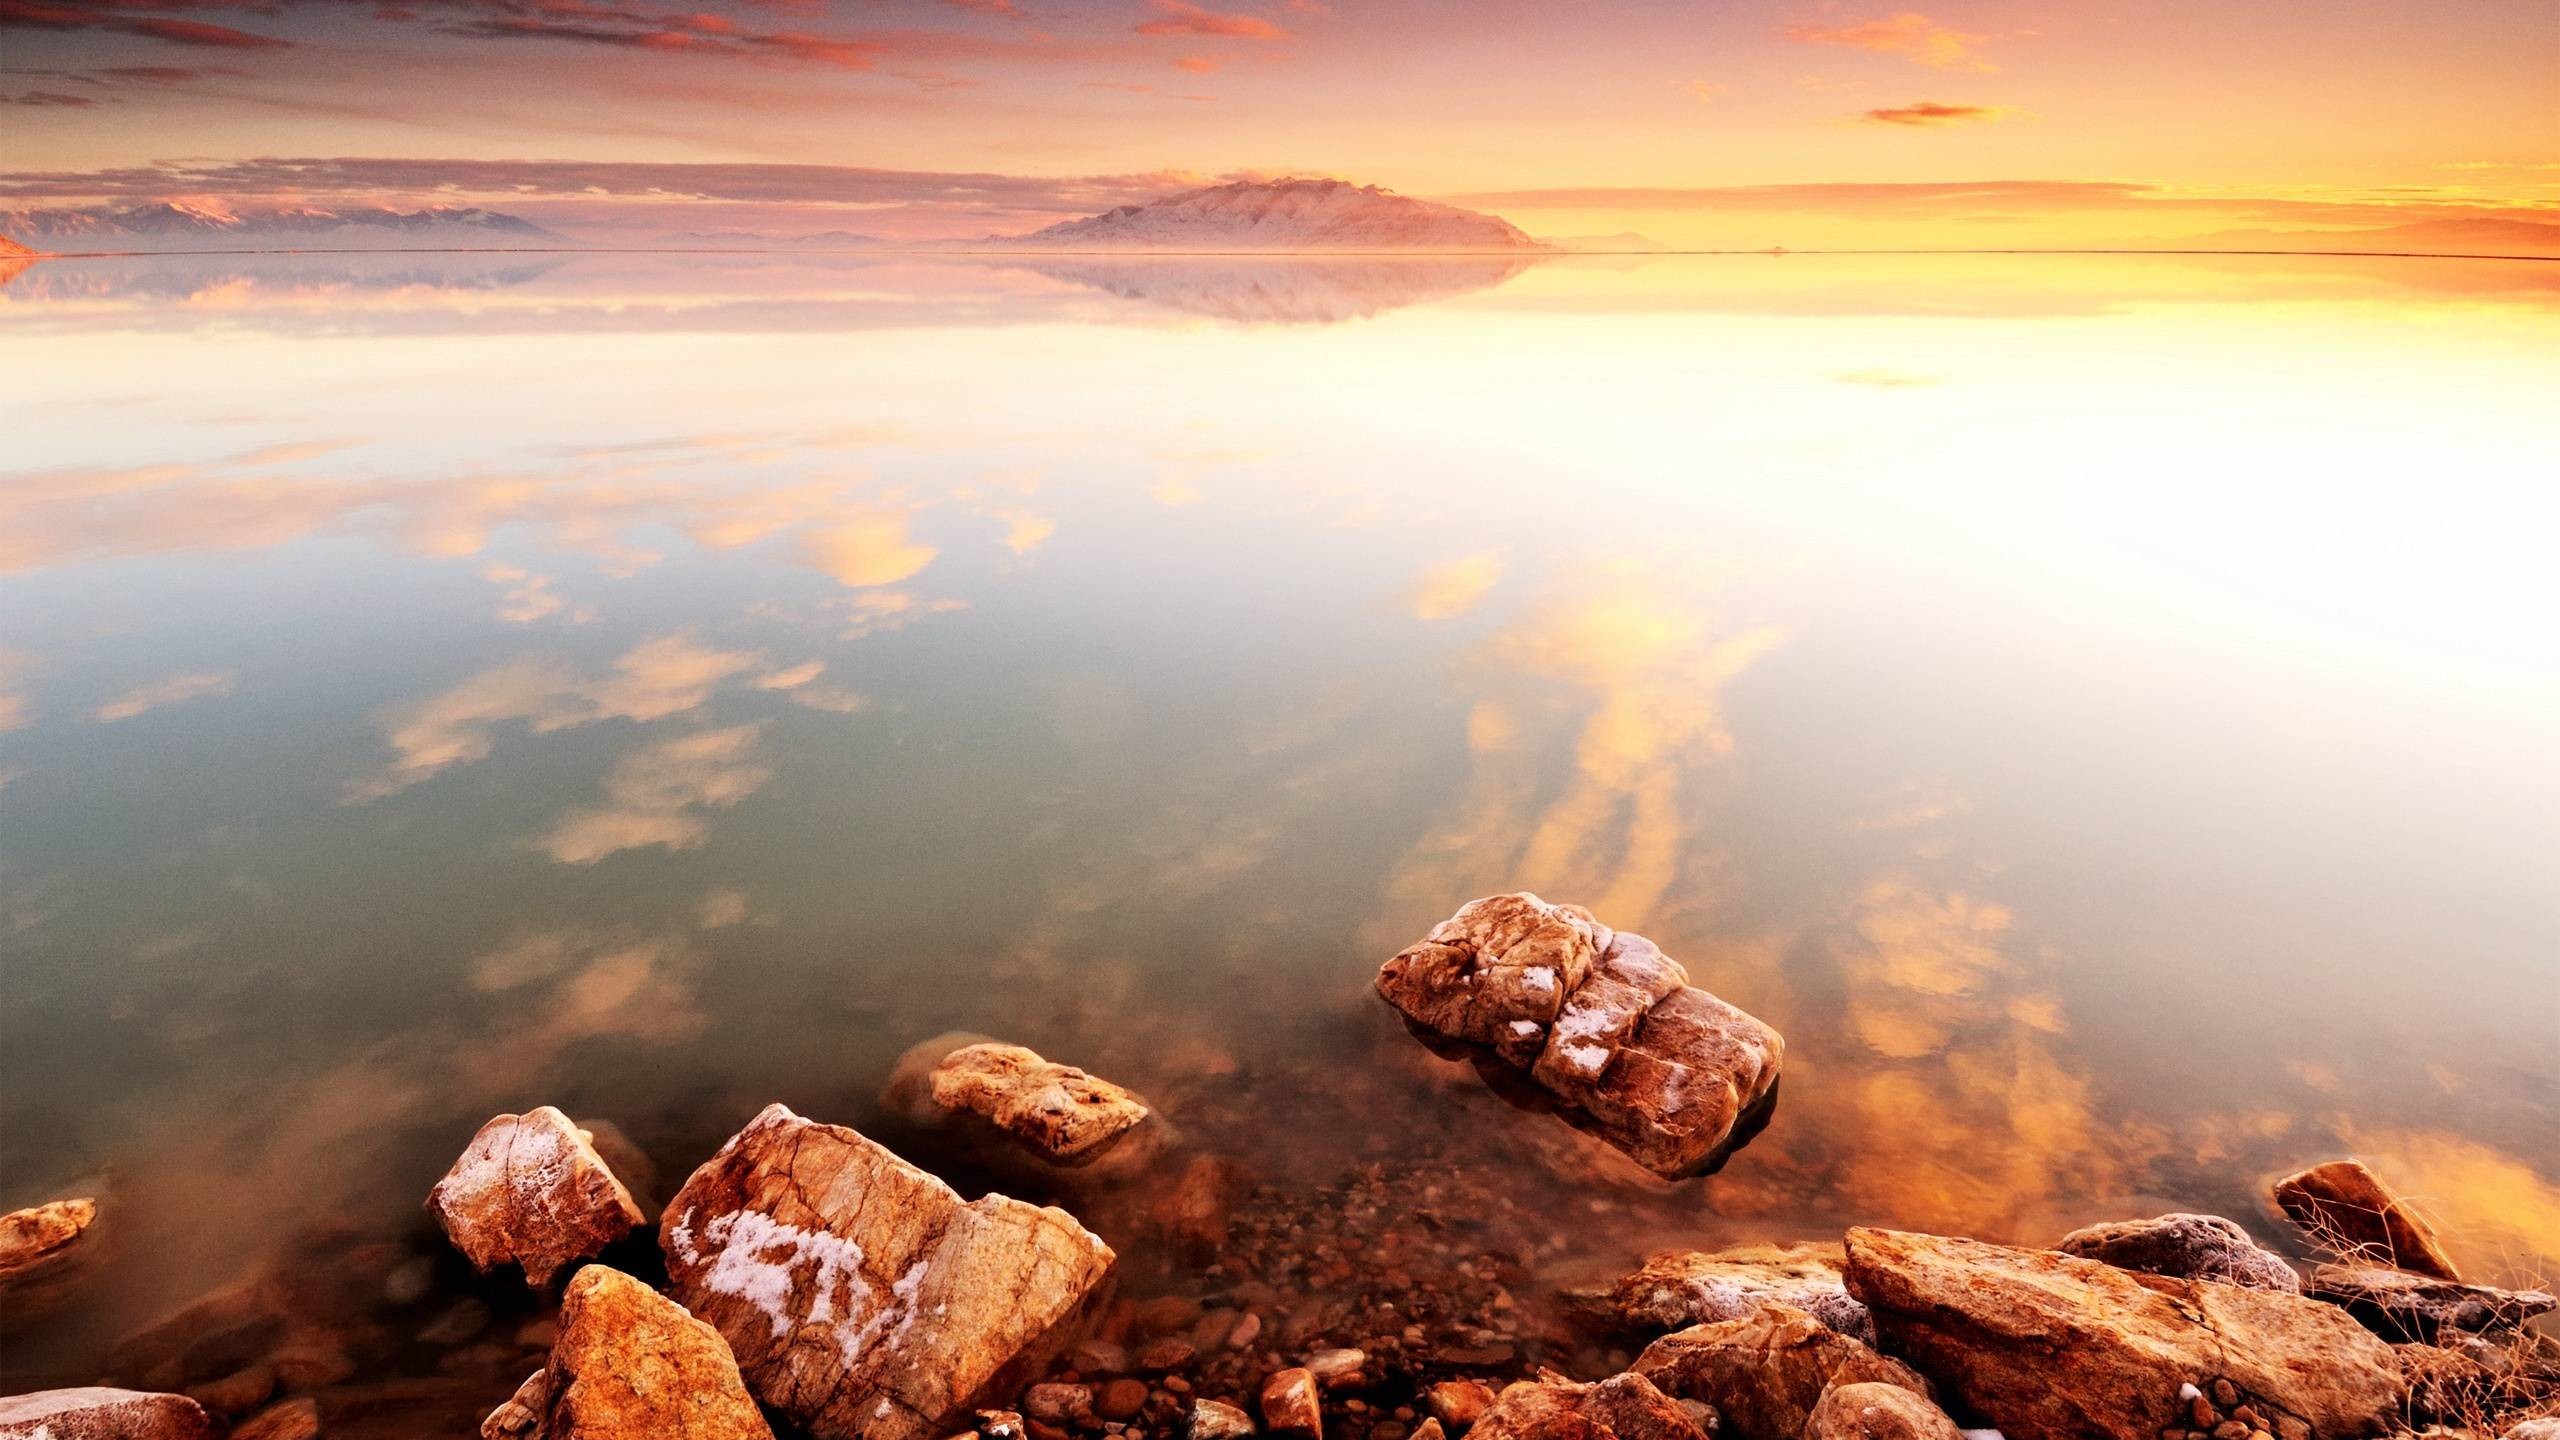 General 2560x1440 nature landscape lake water stones sky sunlight orange sky calm waters